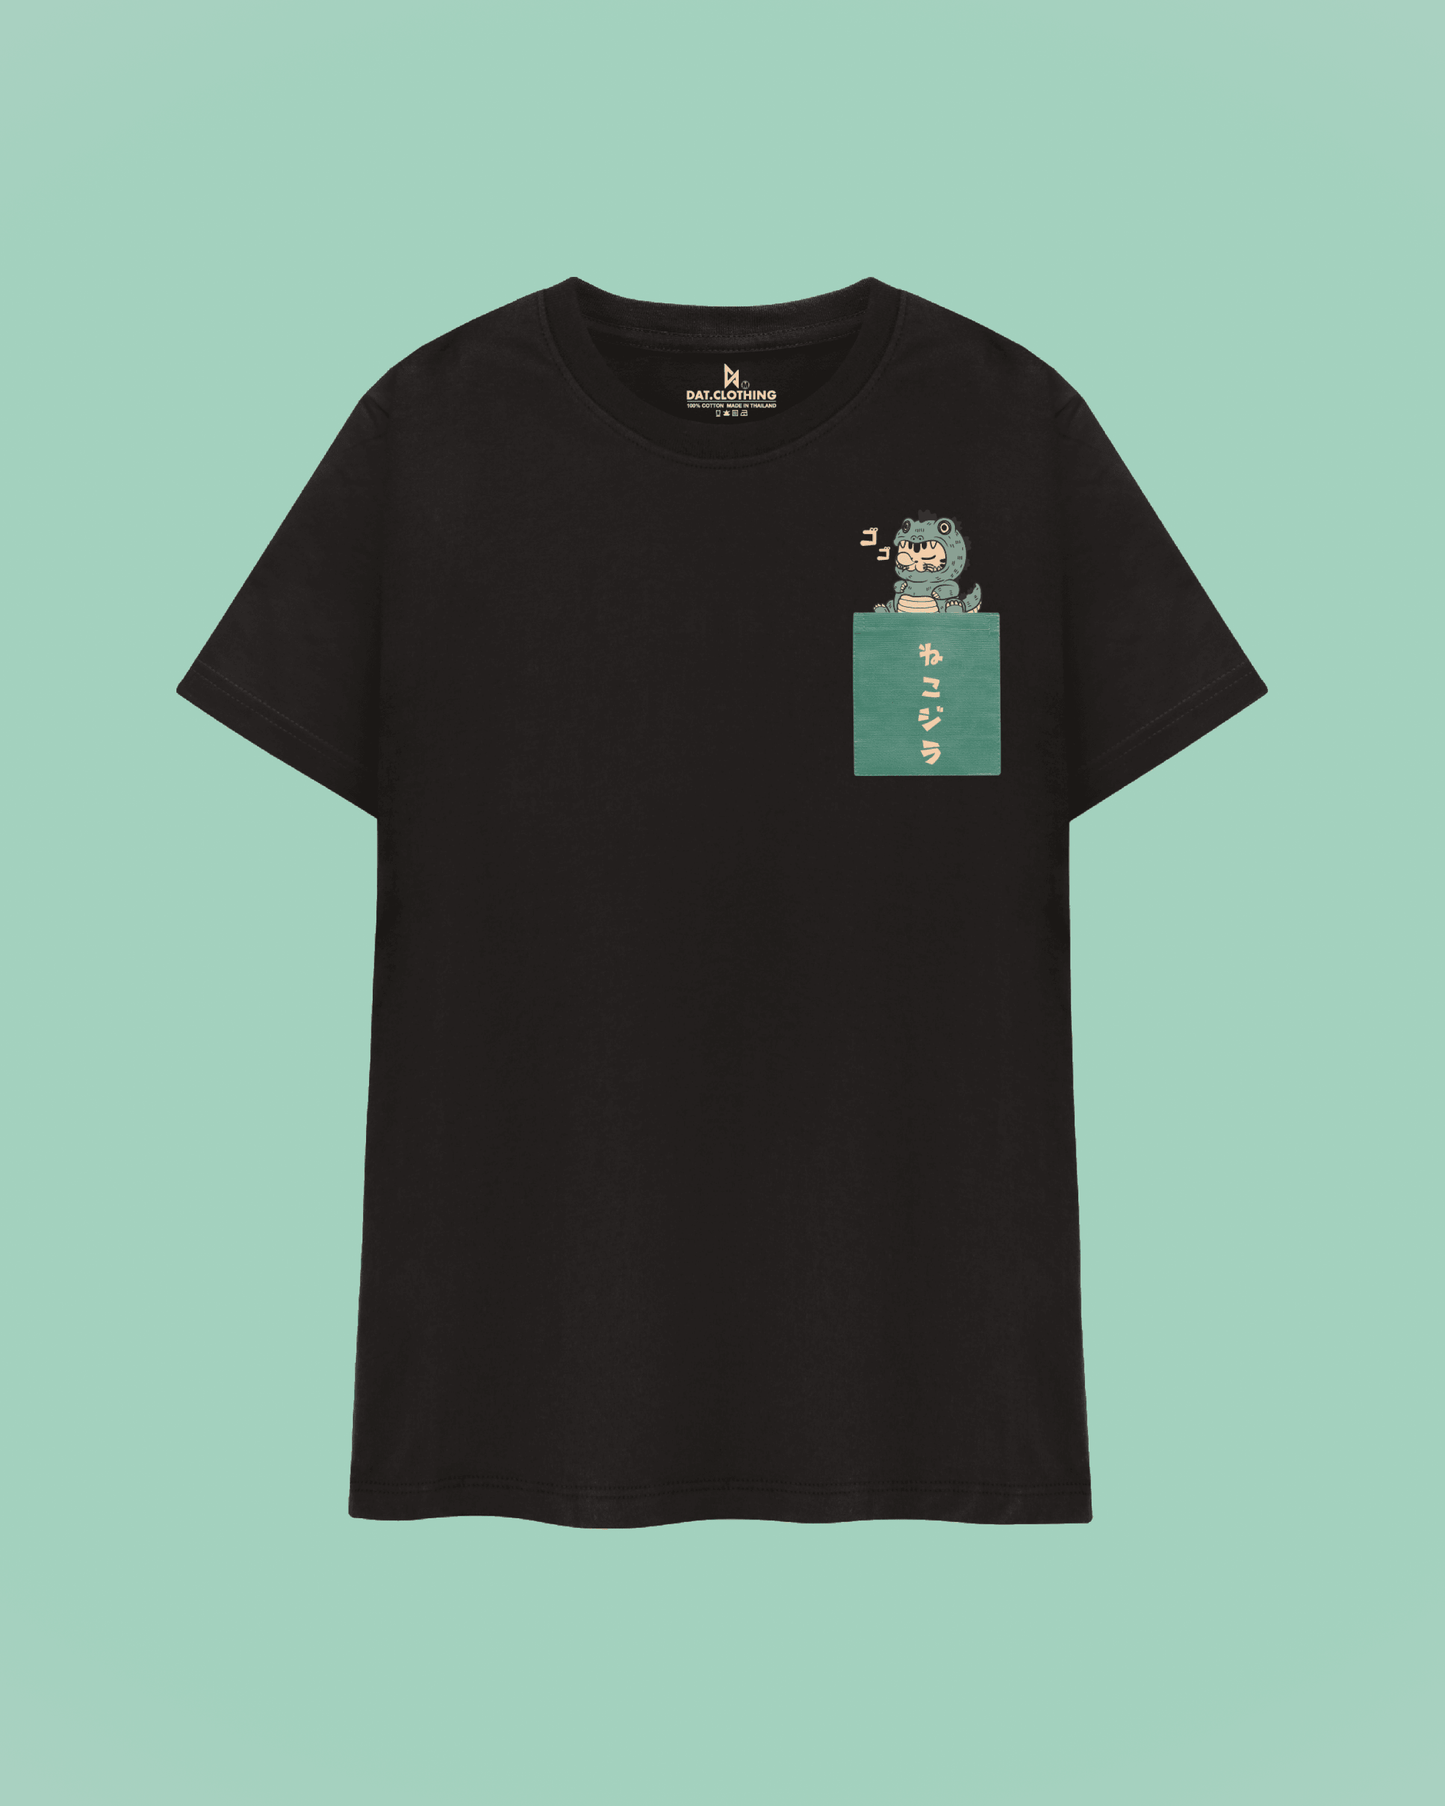 Datclothing - Catzilla print with pocket - black T-shirt